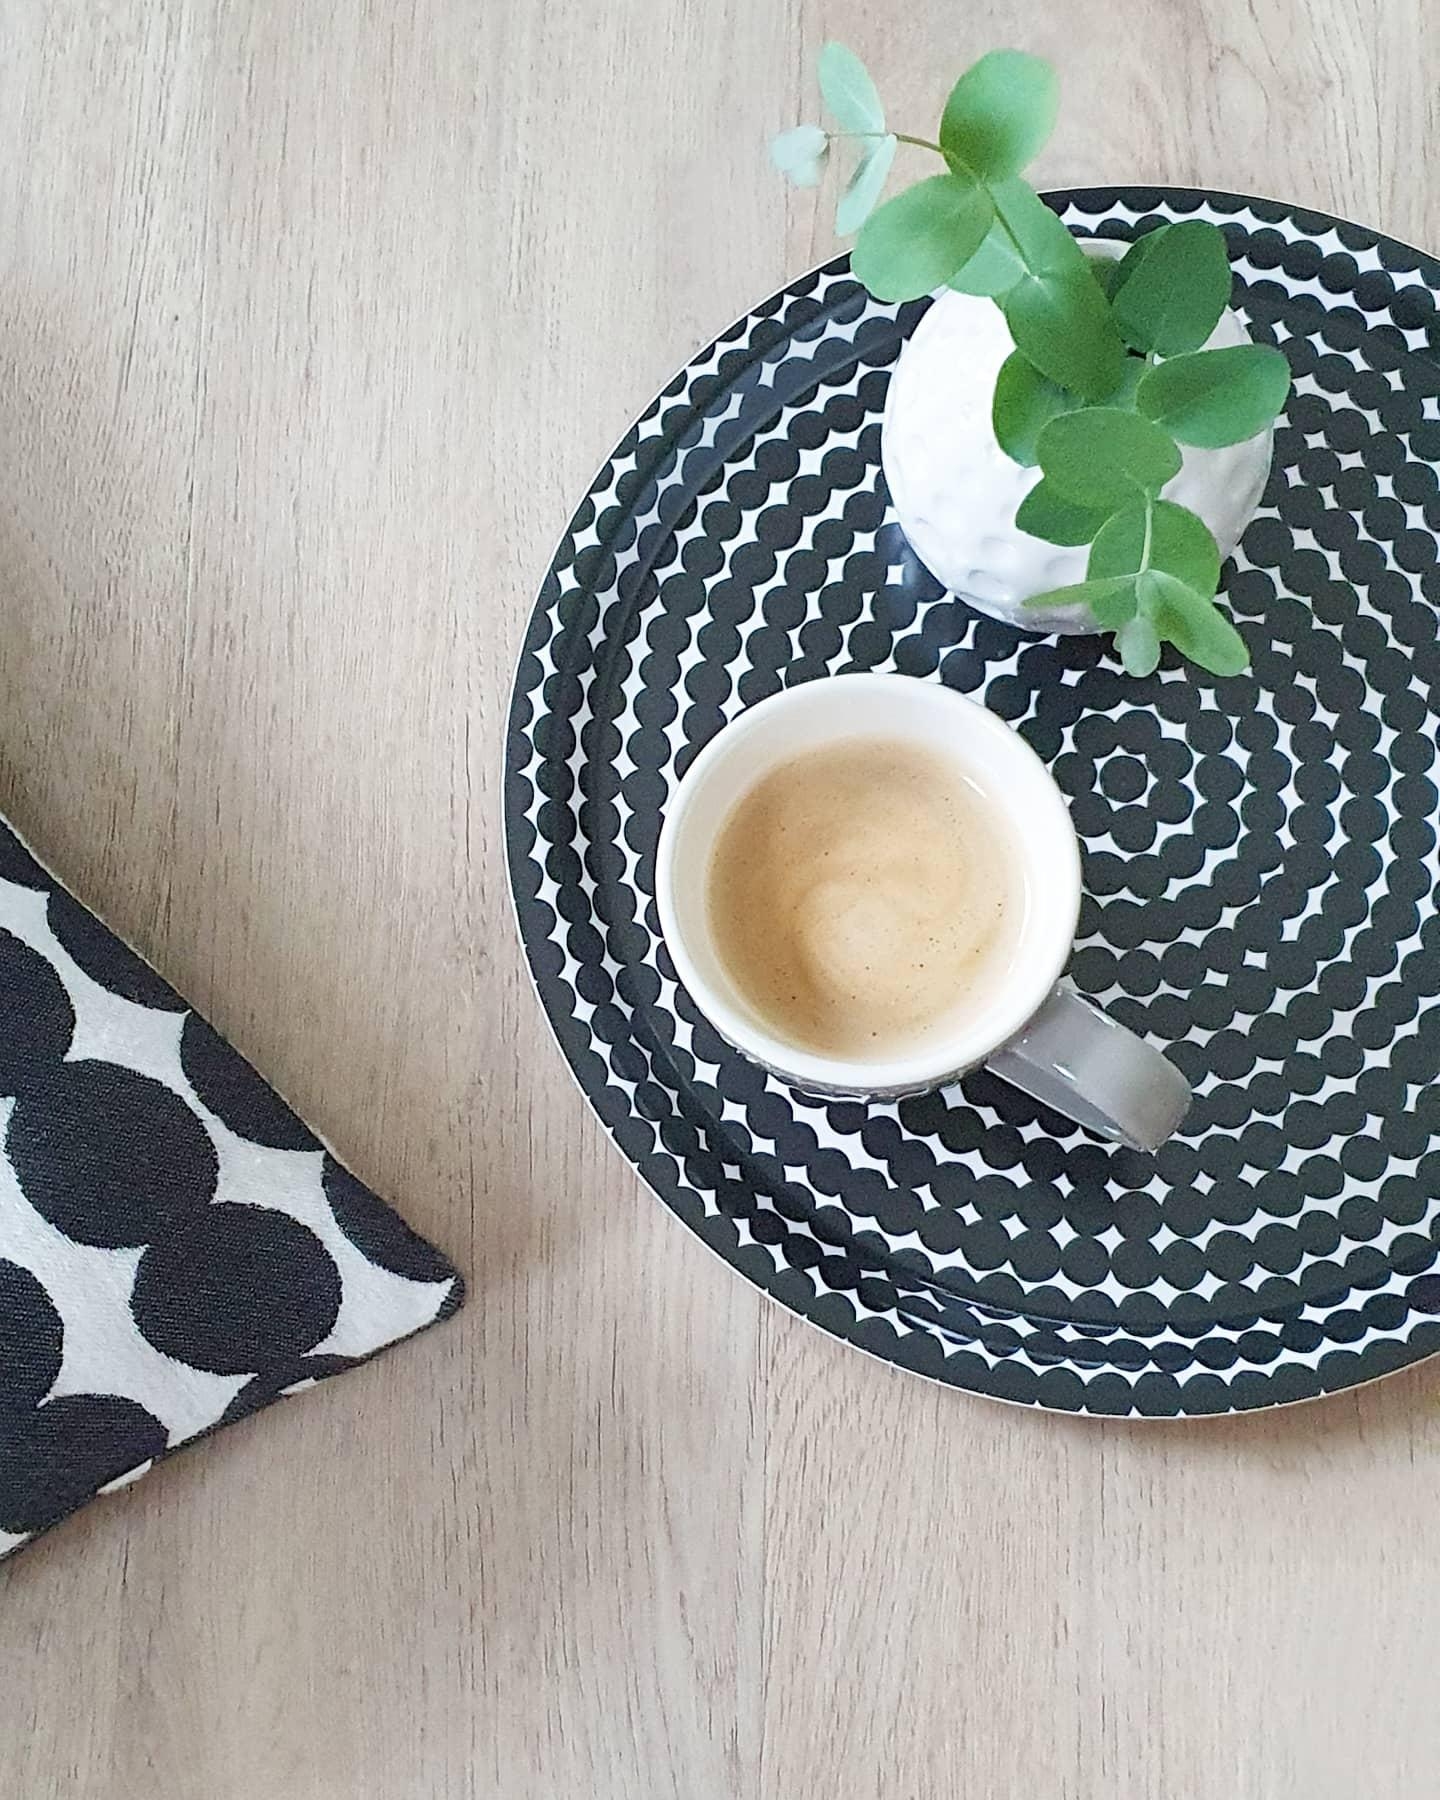 Coffeetime
#zuhause #home #homestyle #homeandliving #living #kaffee #coffee